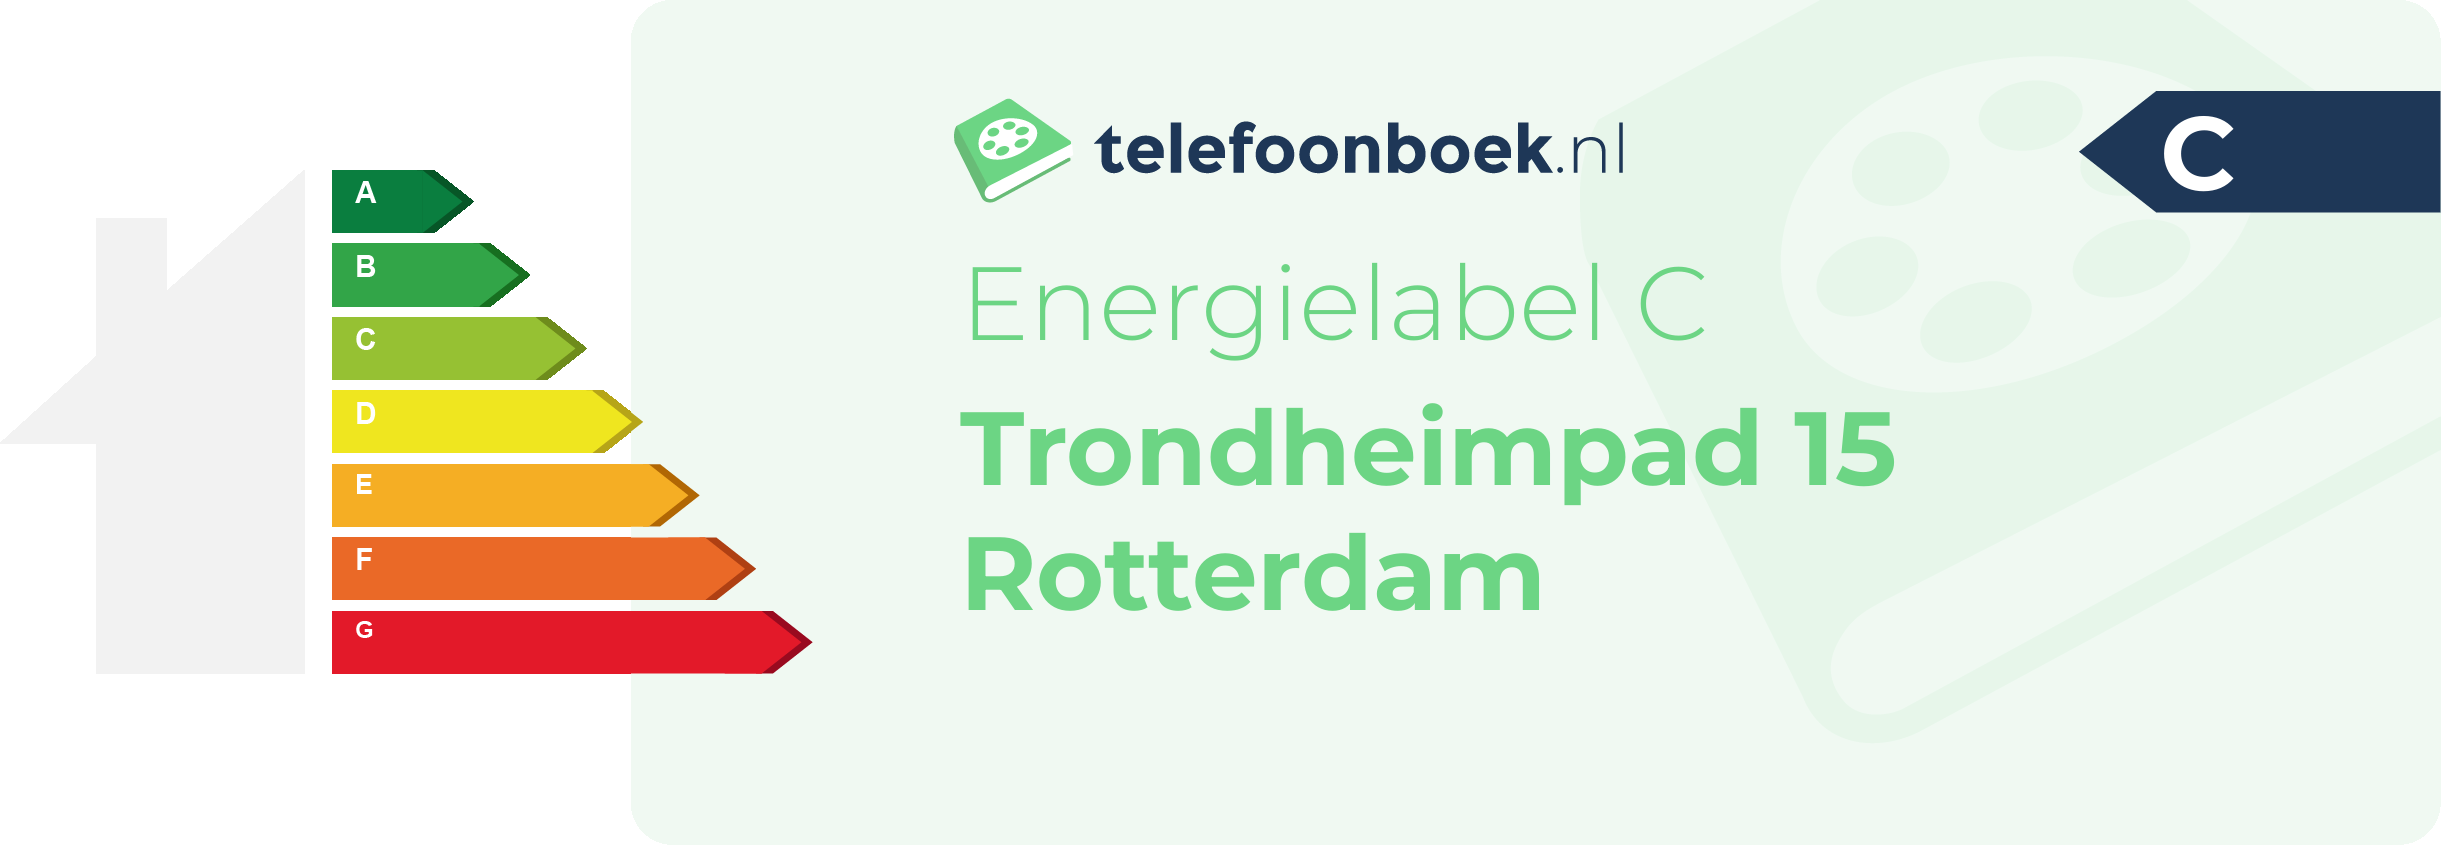 Energielabel Trondheimpad 15 Rotterdam